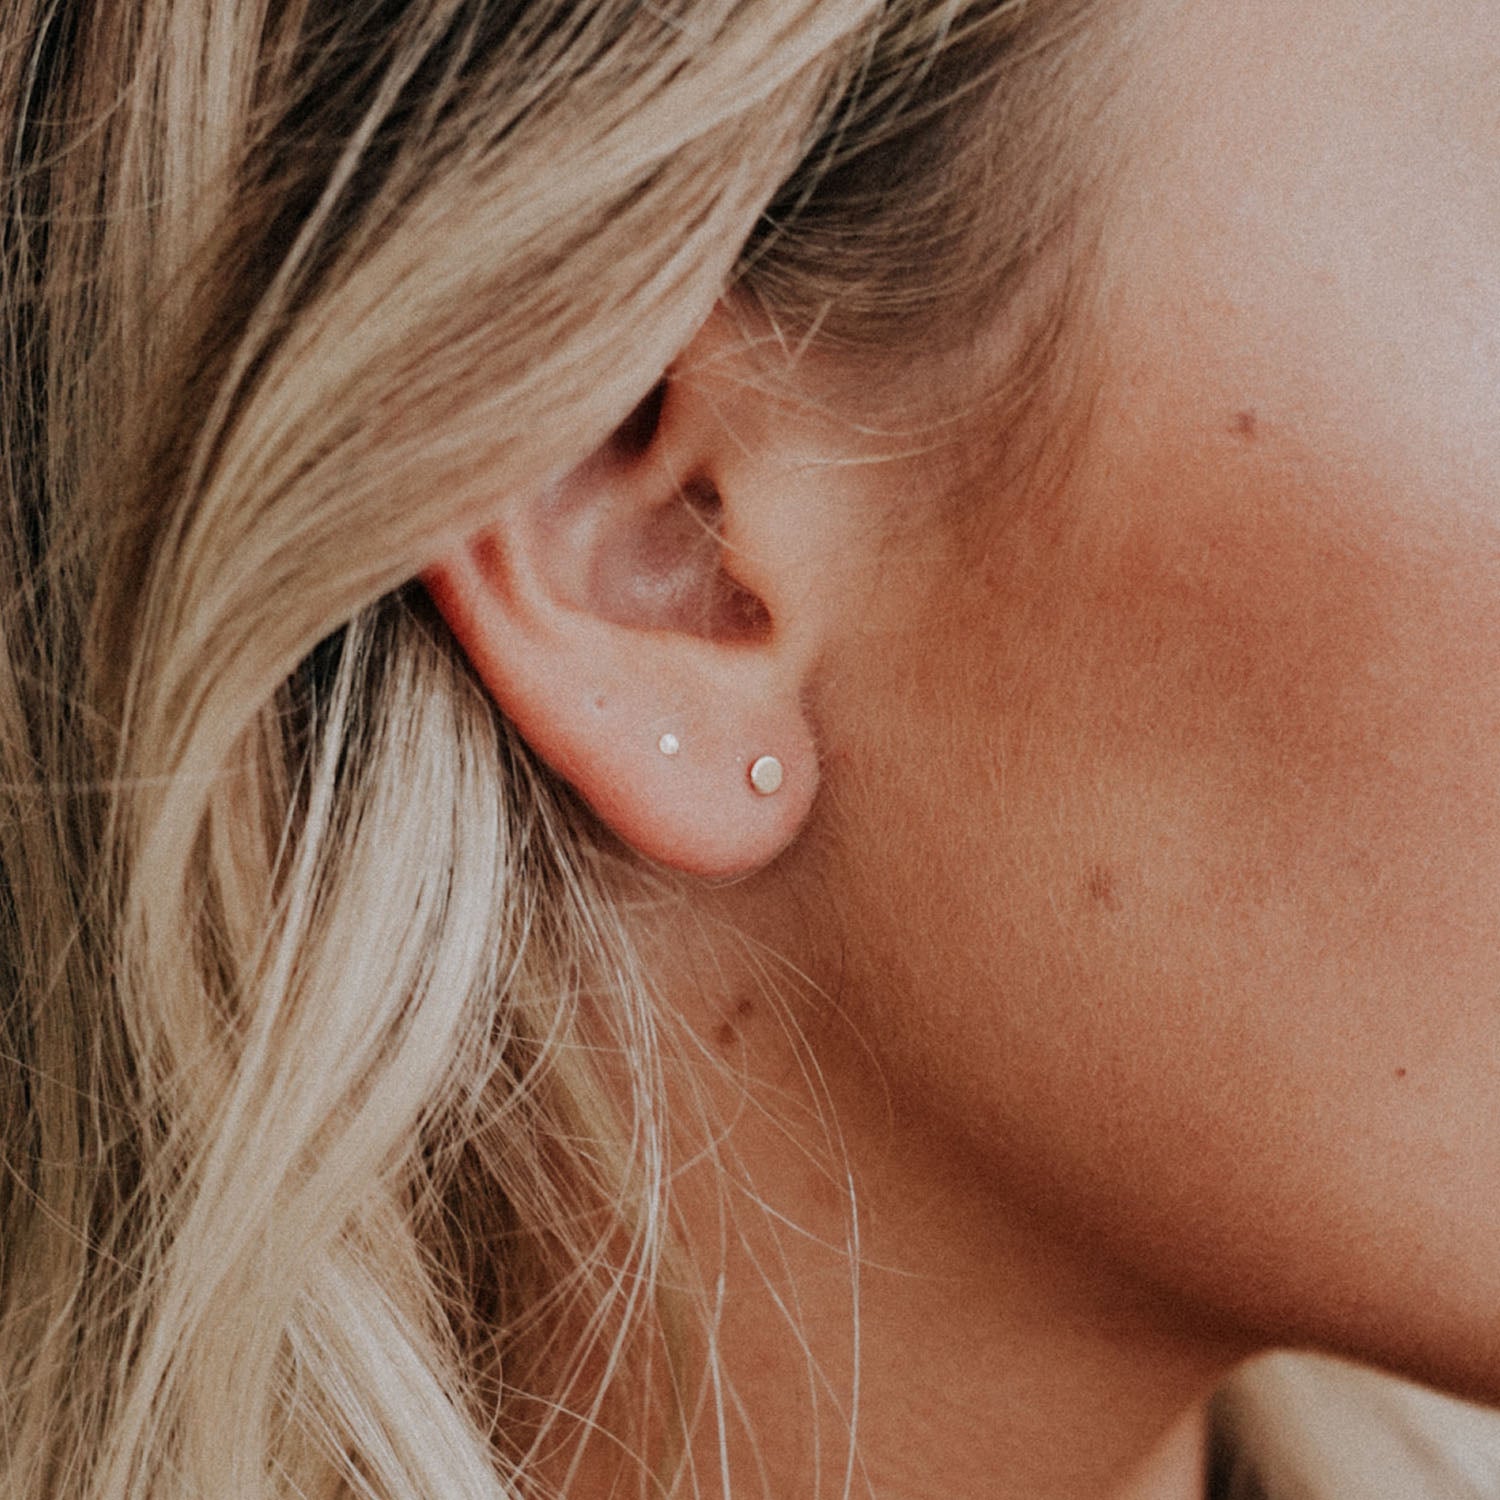 14k gold ear locking earring backs parts from